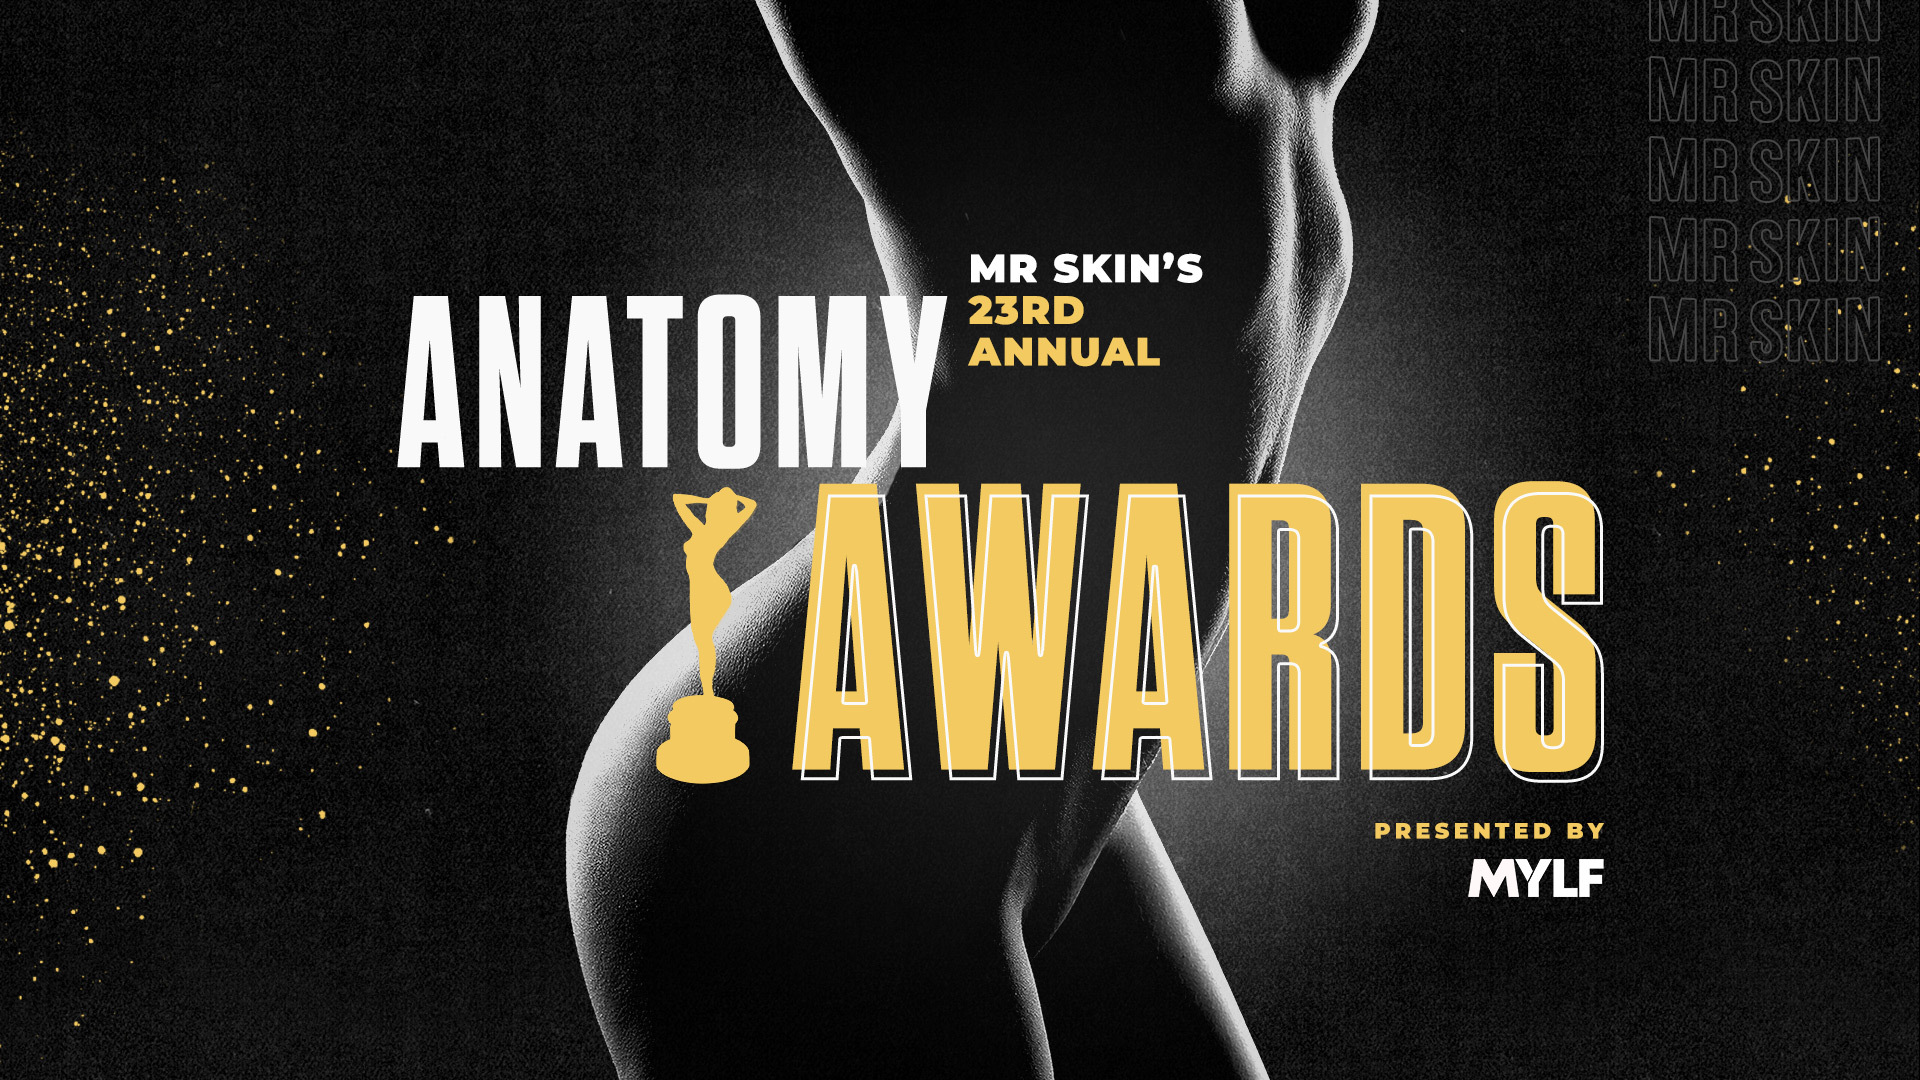 Mr. Skin's 23rd Annual Anatomy Awards.